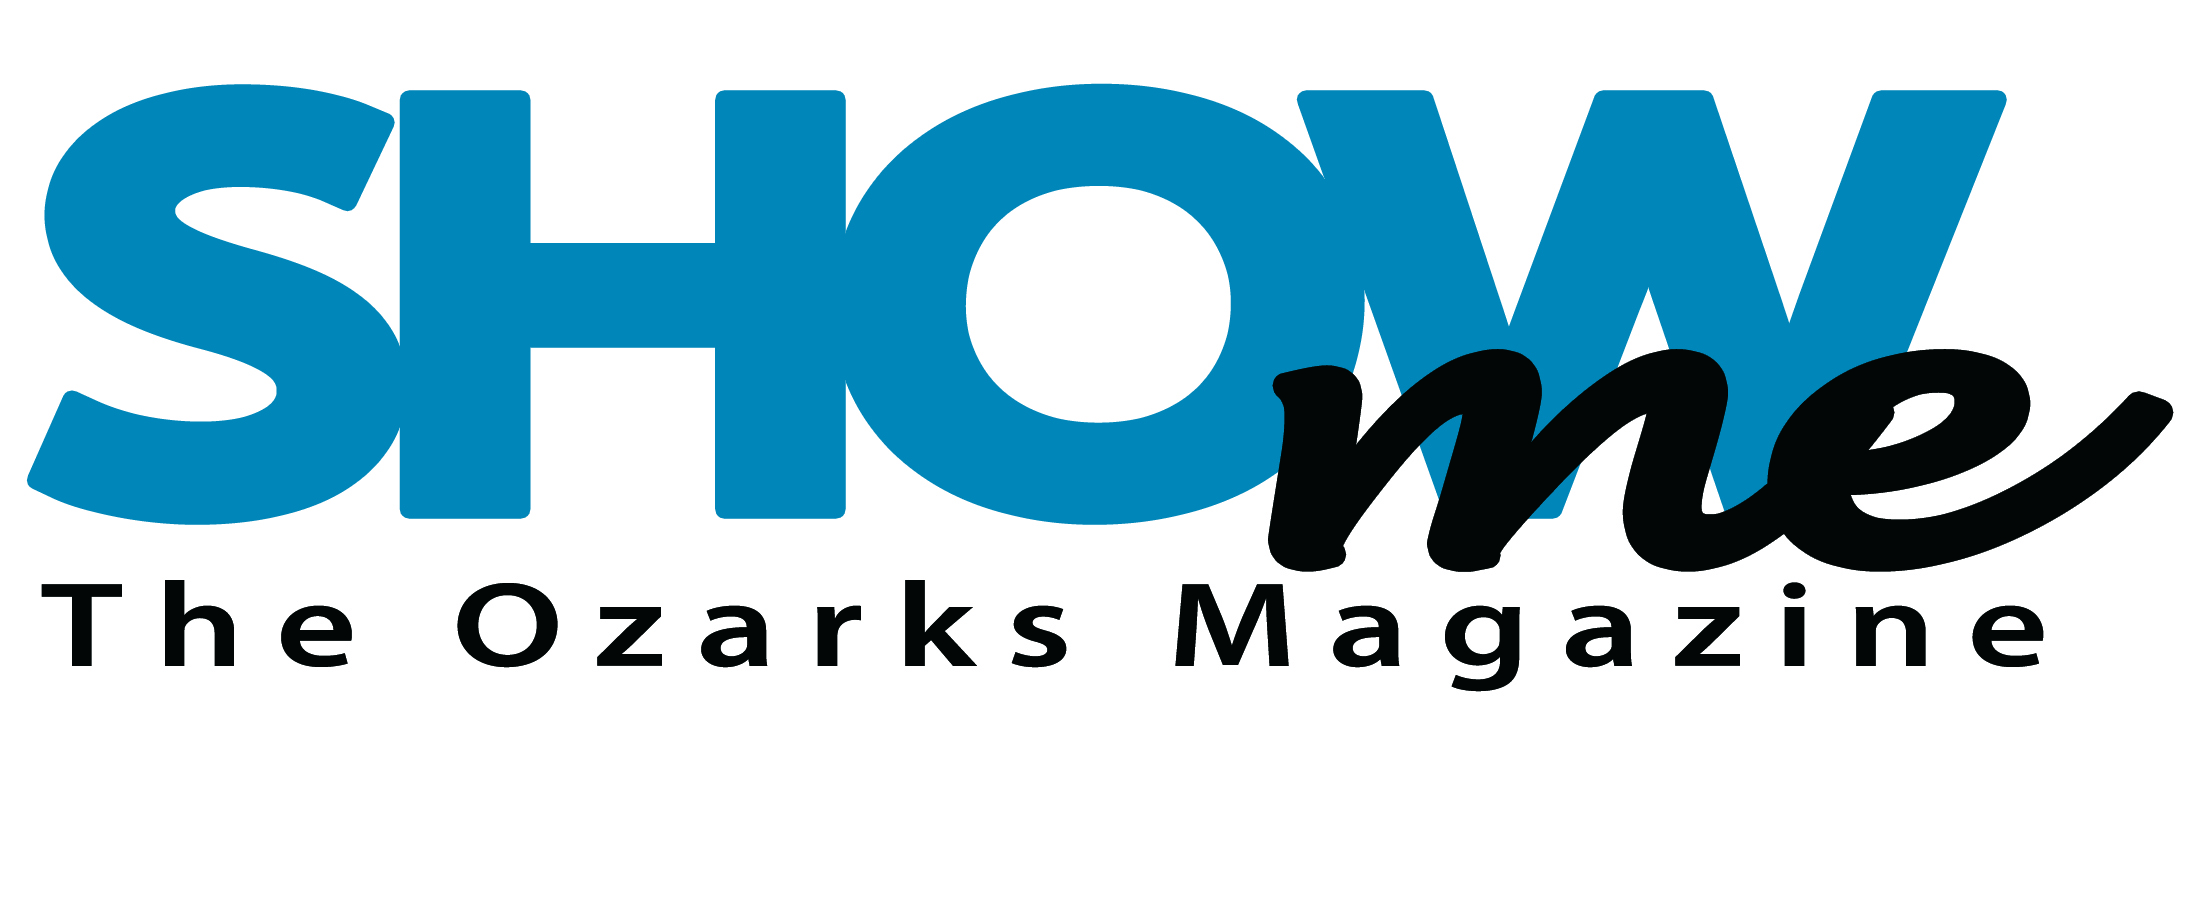 Show Me the Ozarks Magazine 